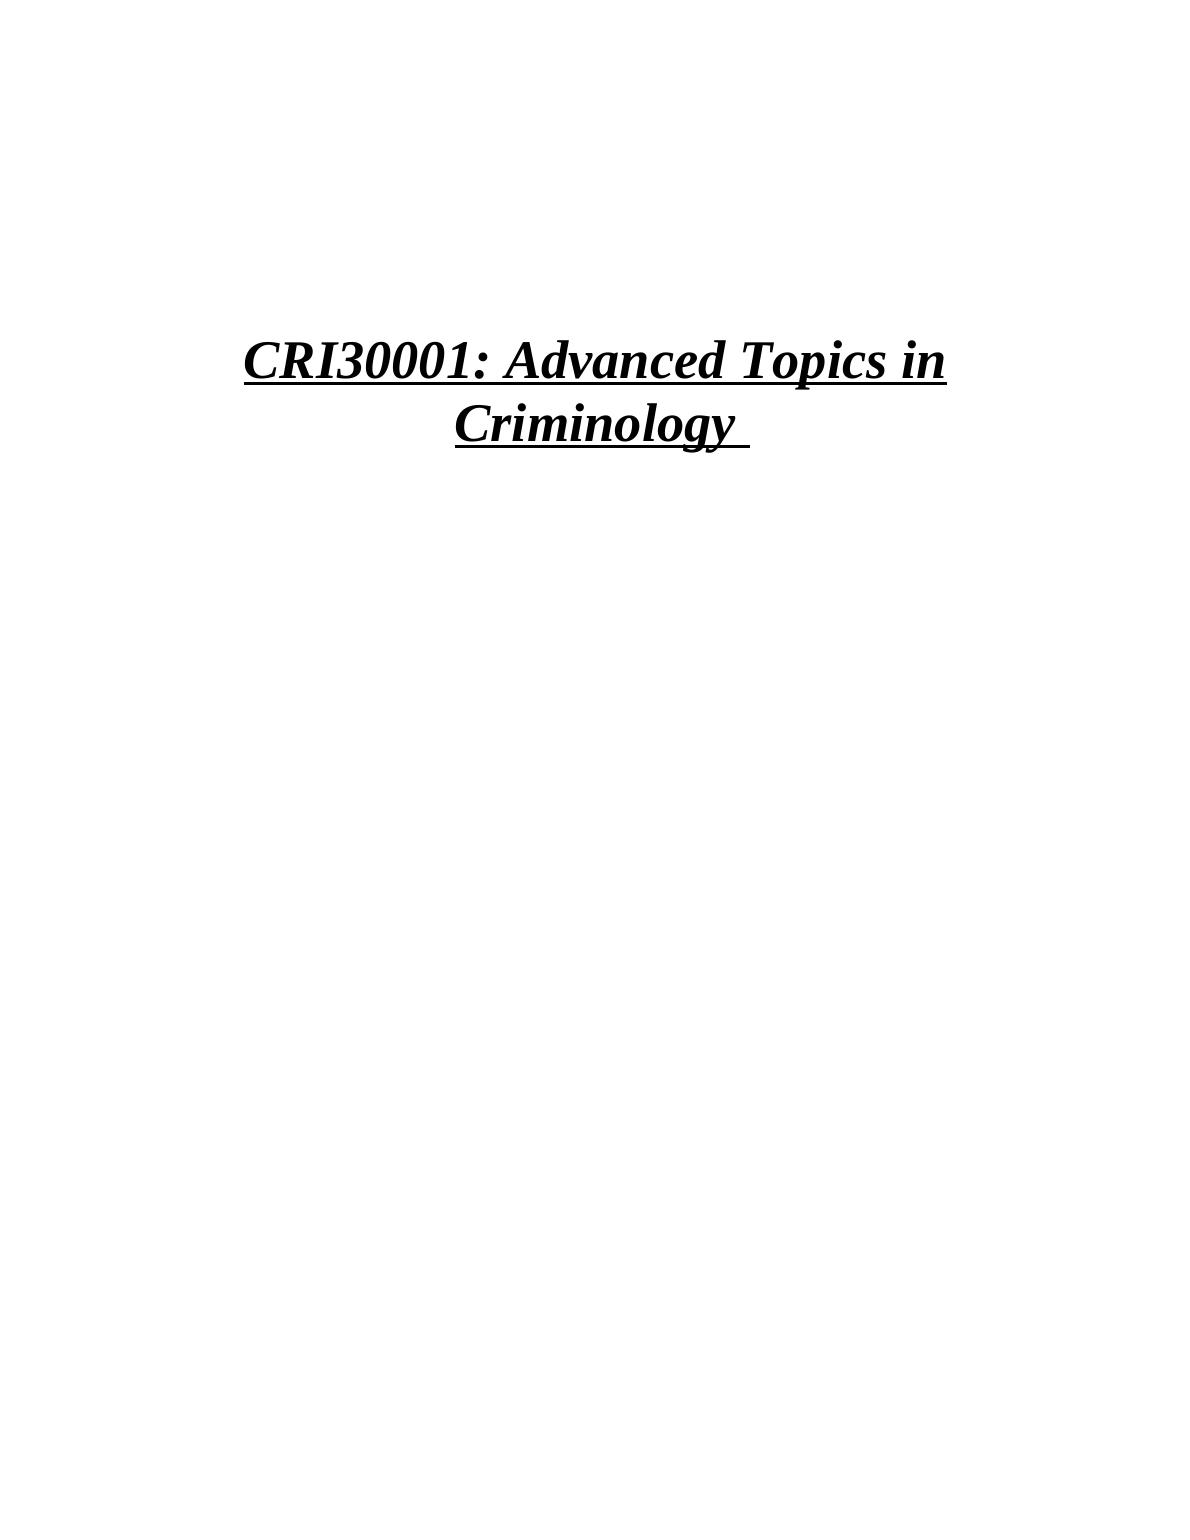 CRI30001: Advanced Topics in Criminology Assignment_1